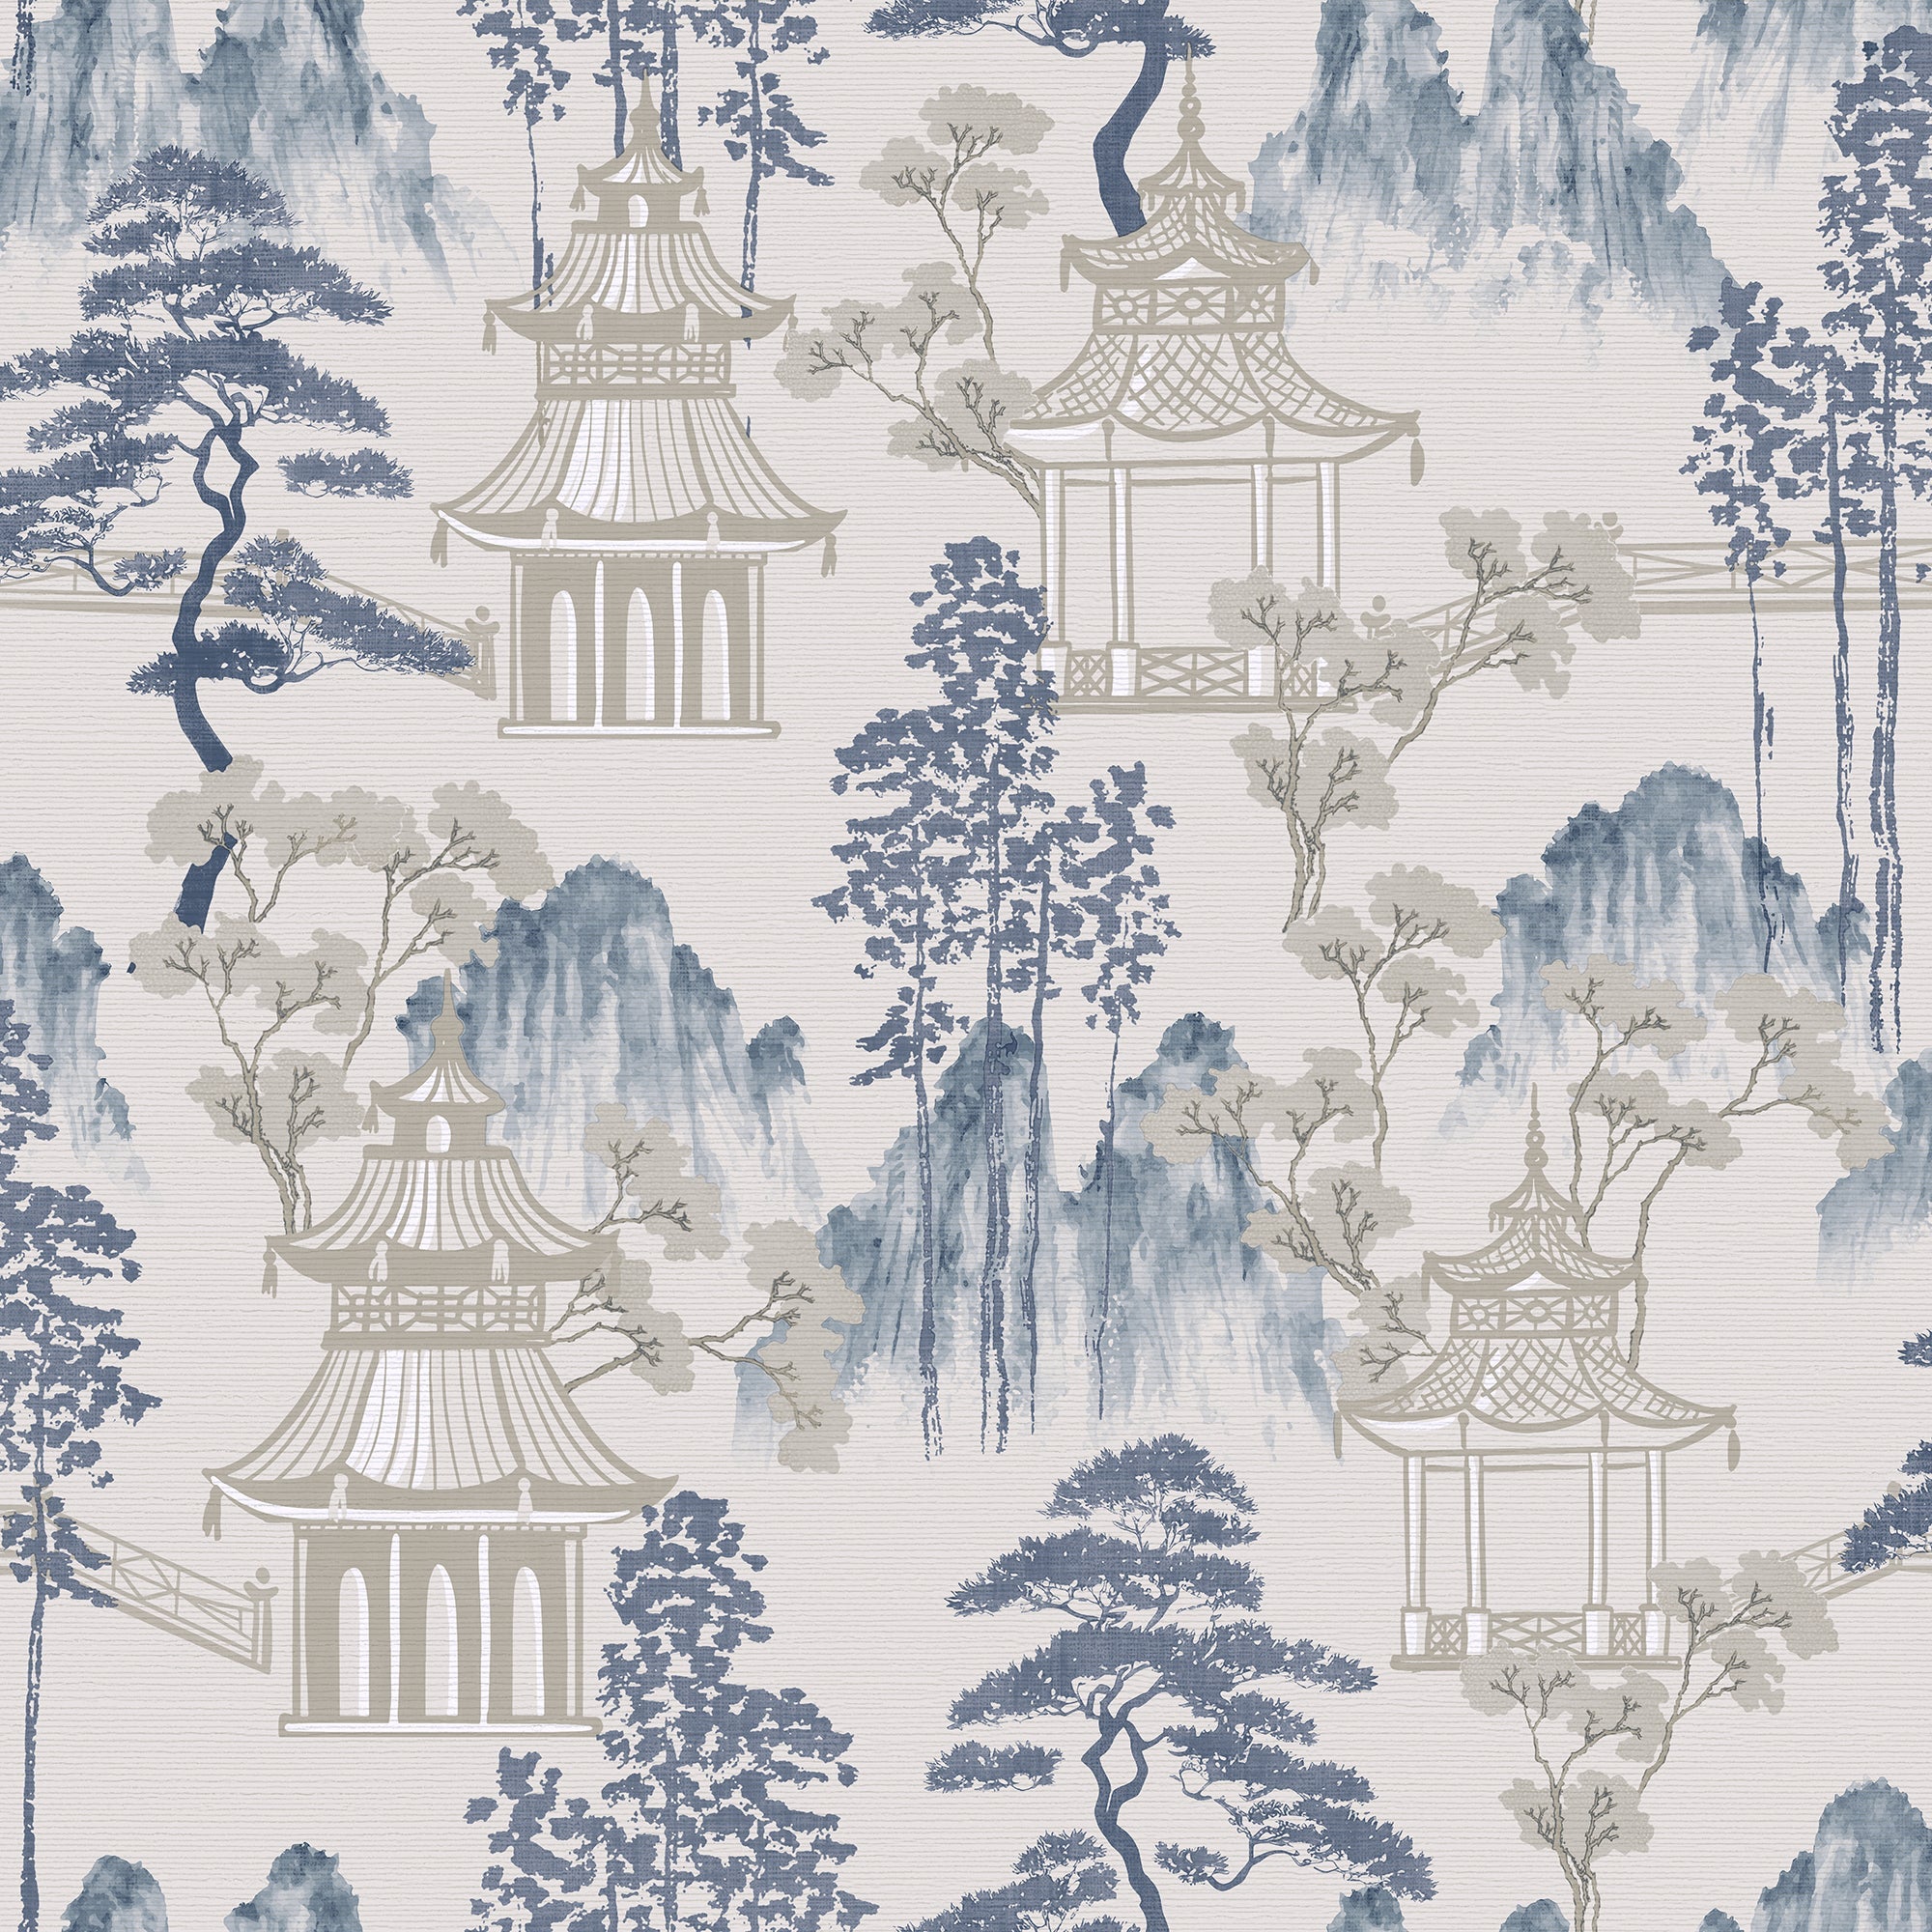 Japanese Pagoda Blue Grey sw12 by Arthouse